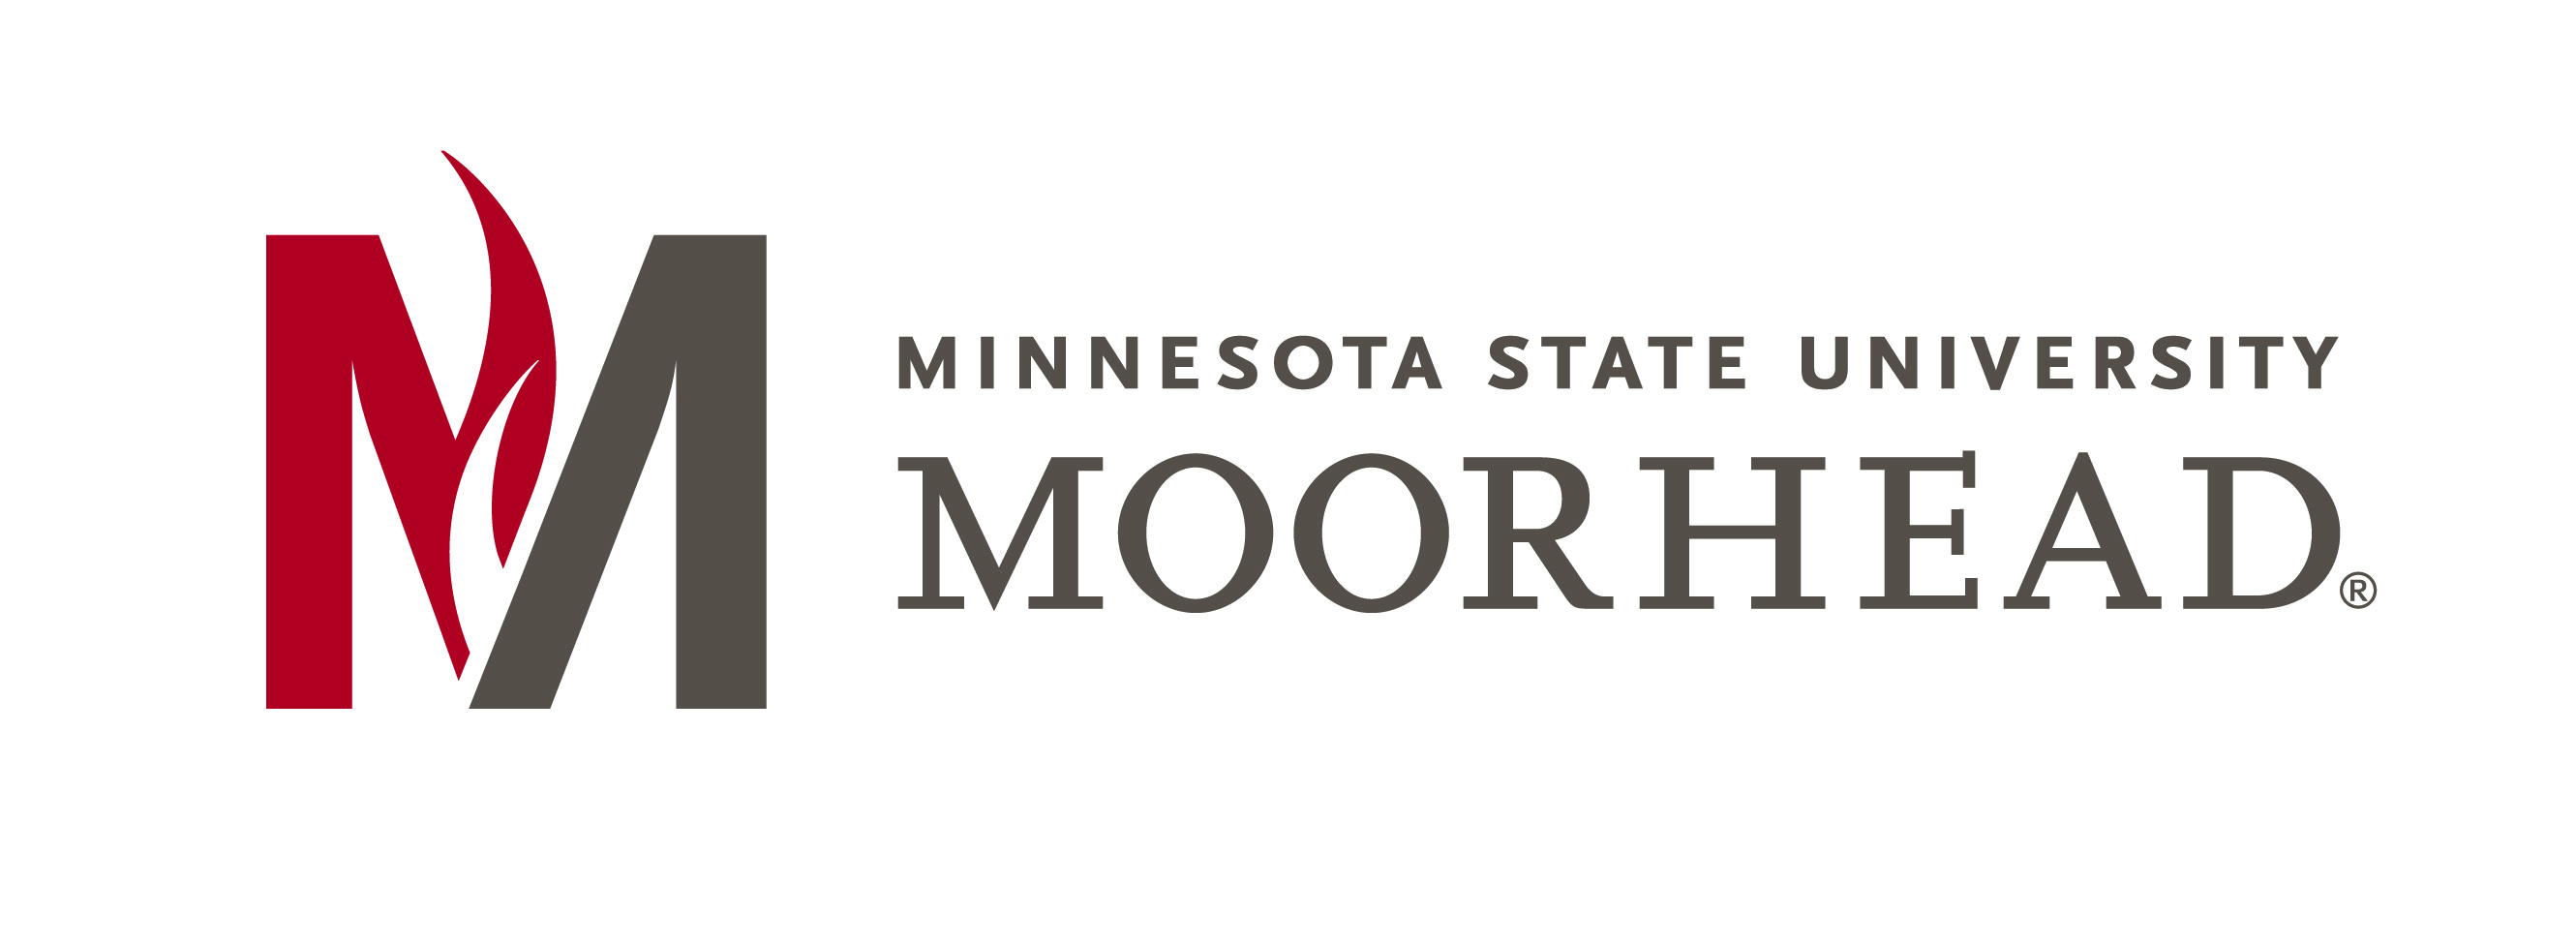 Minnesota State University - Moorhead Logo photo - 1